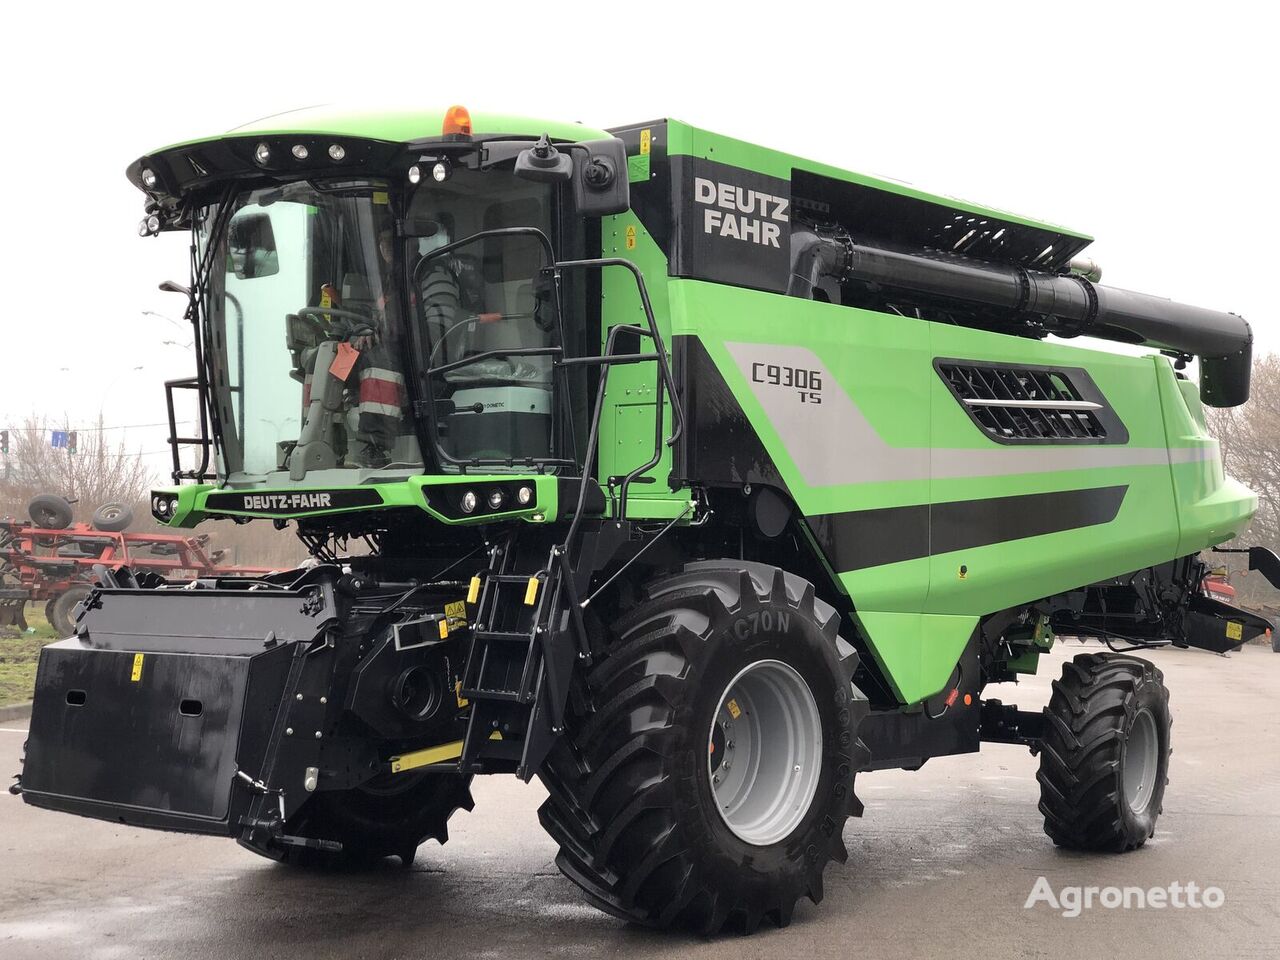 new Deutz-Fahr S9306TS grain harvester